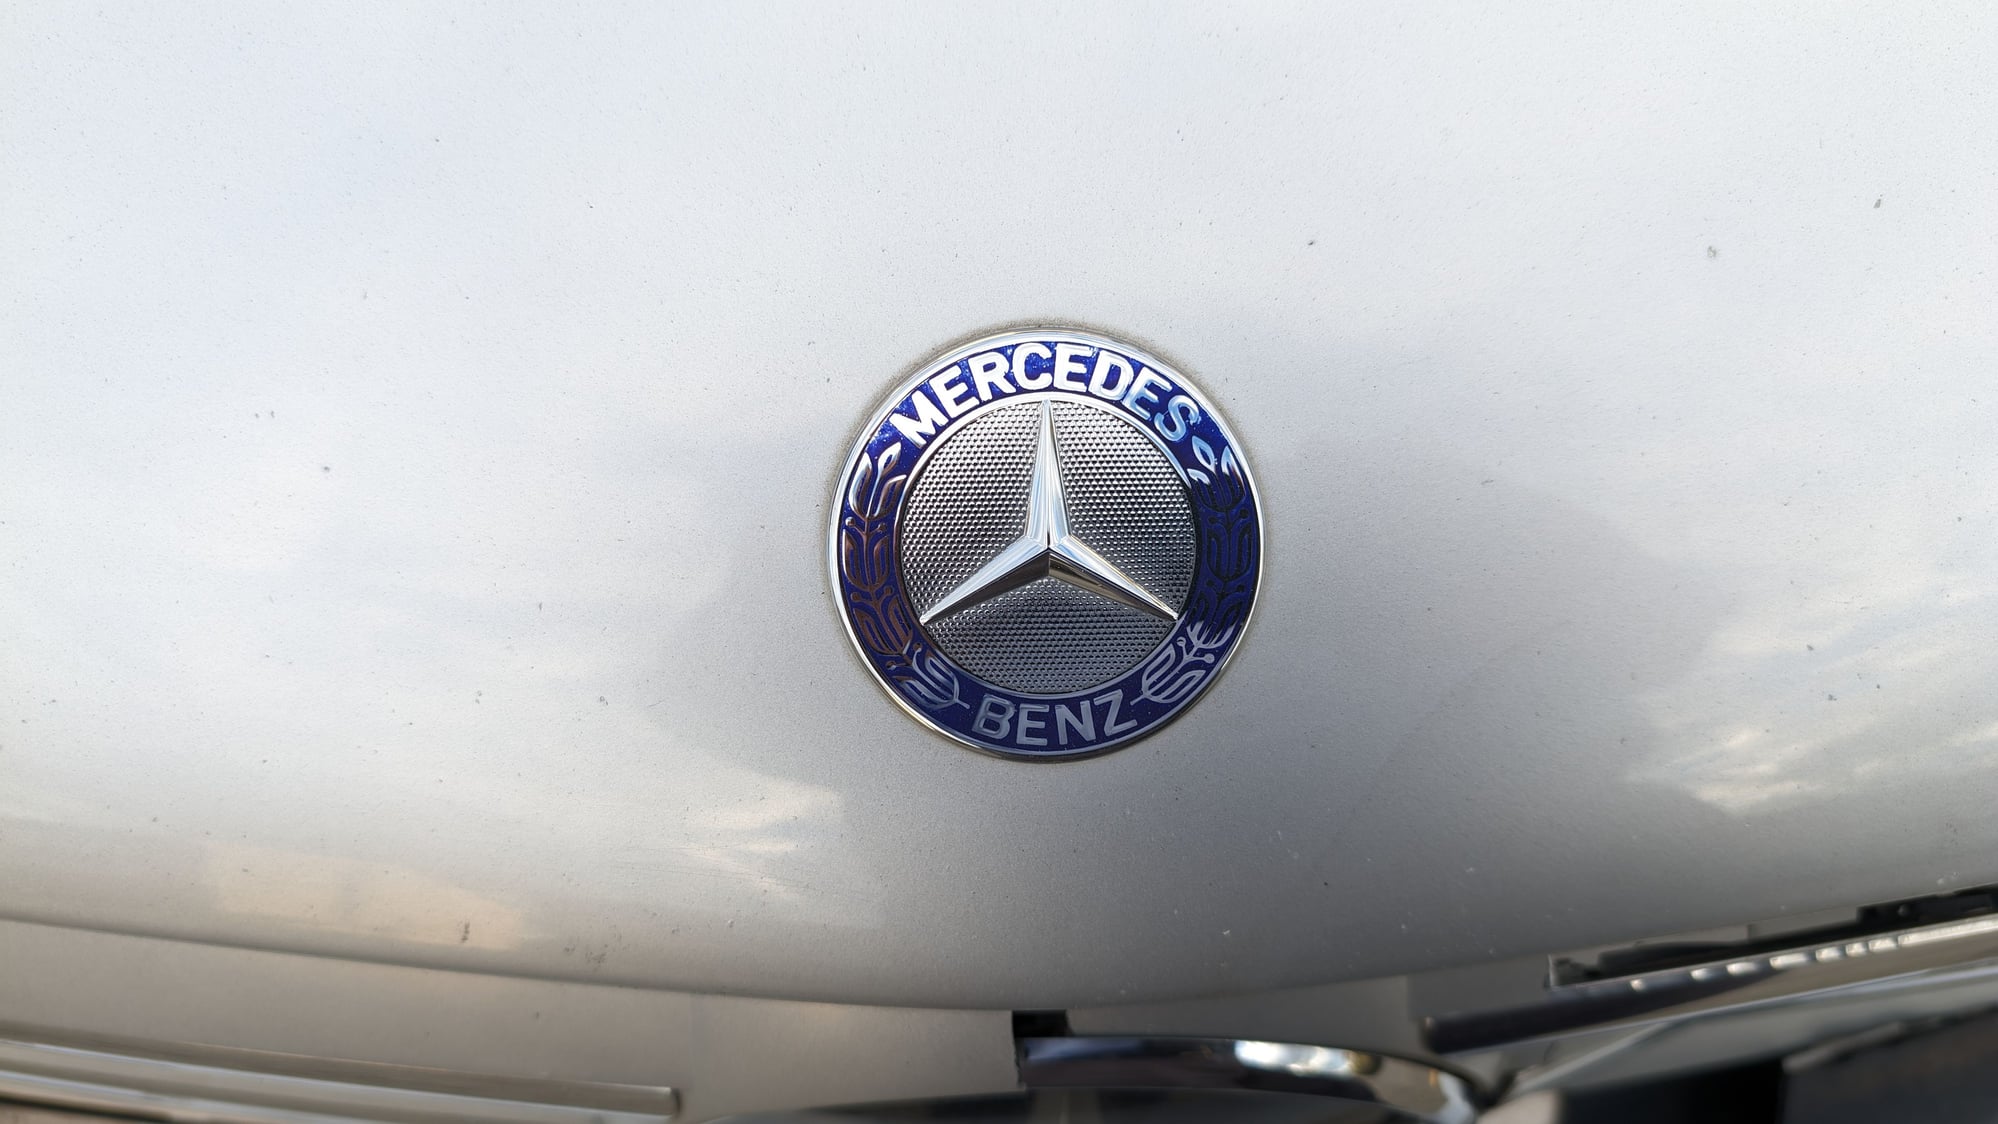 2007 Mercedes-Benz SL550 - SL550 for Sale - Minor Front End Damage - Used - Washington, PA 15301, United States